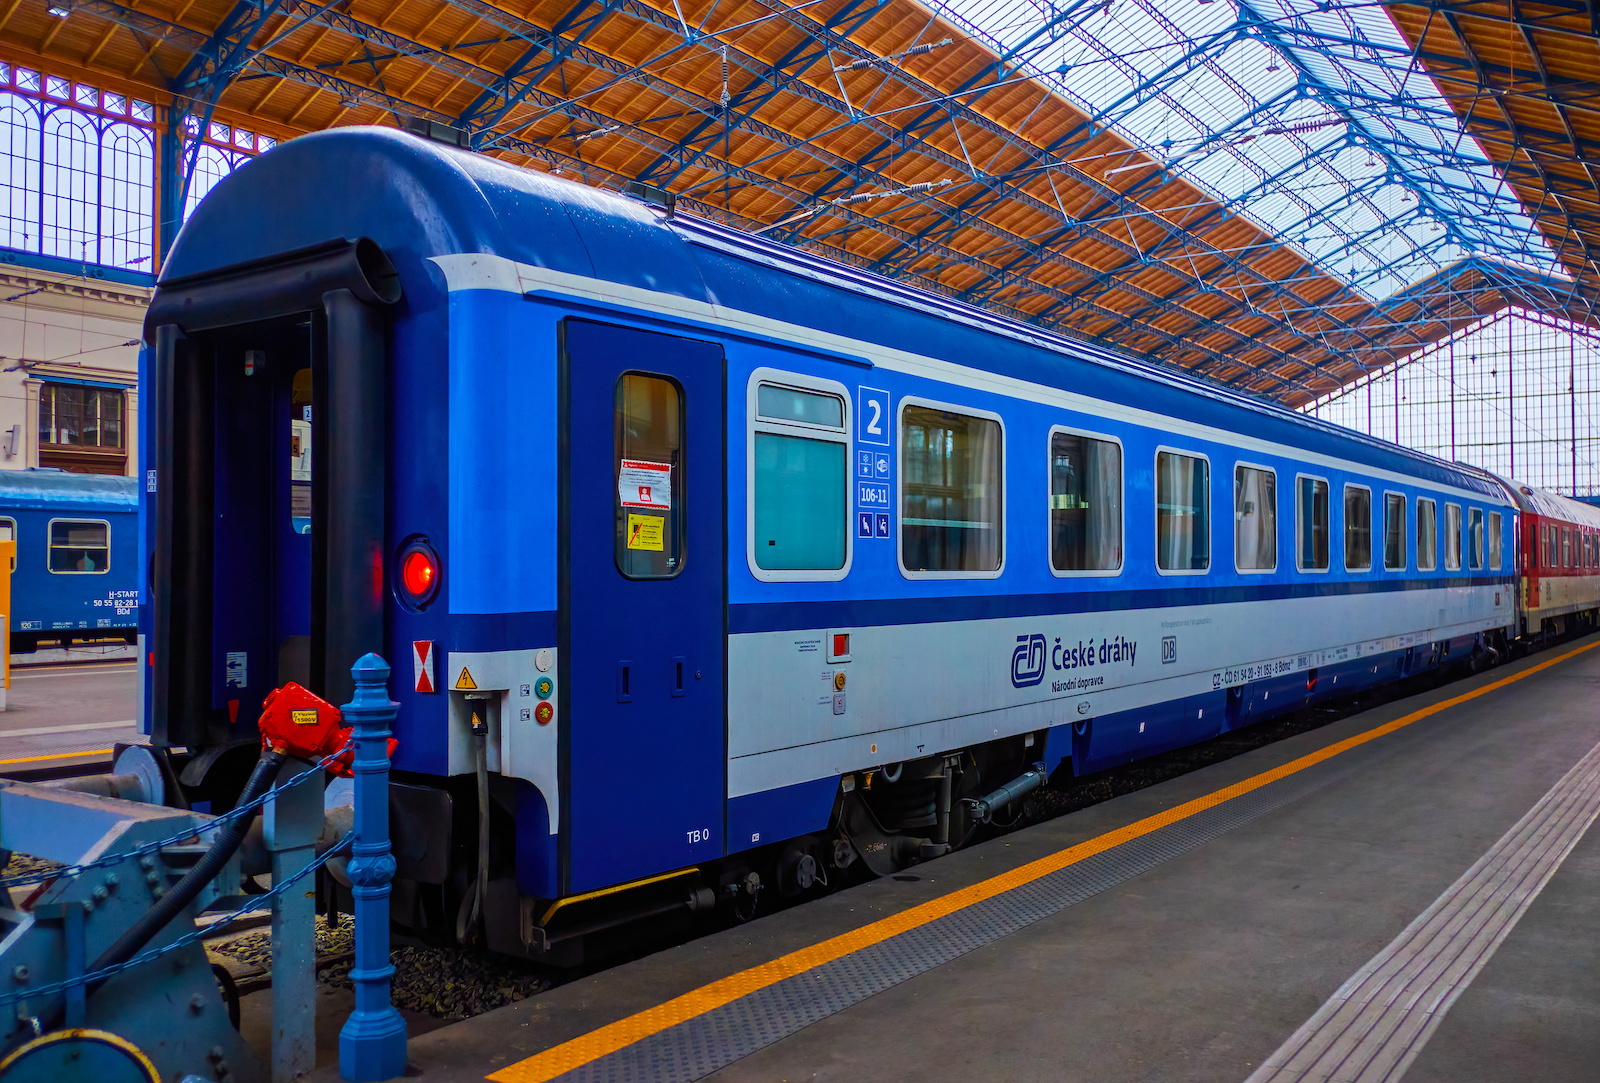 Czech passenger train on the platform of Nyugati Railway Station, on March 4 in Budapest, Hungary